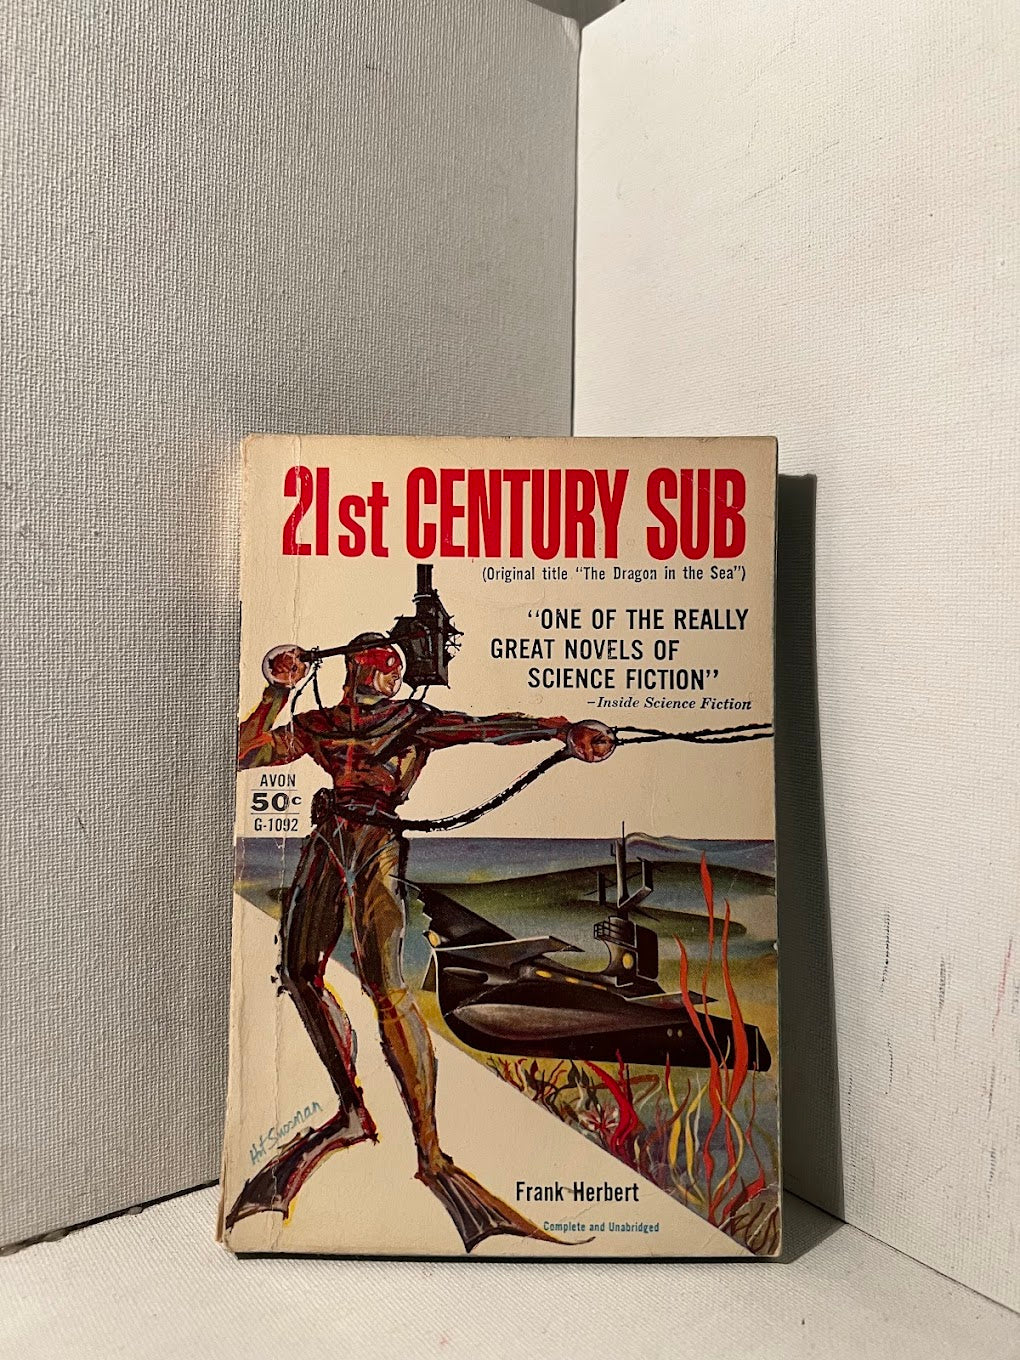 21st Century Sub by Frank Herbert